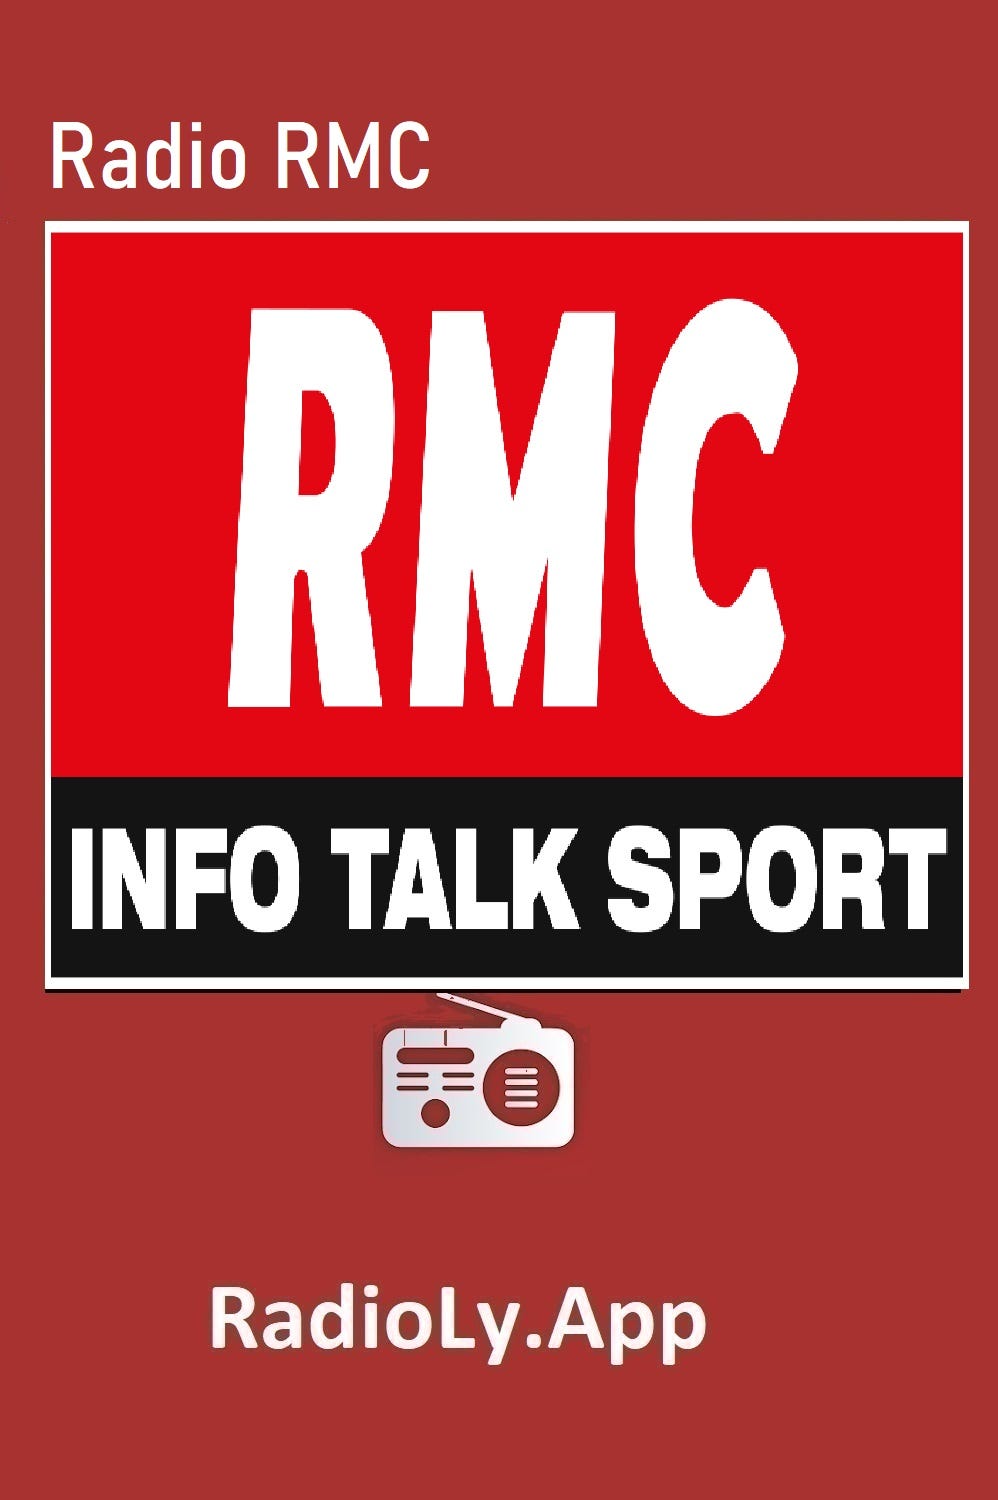 Radio RMC — France Radio Station Online — RadiolyApp - Radioly - Medium